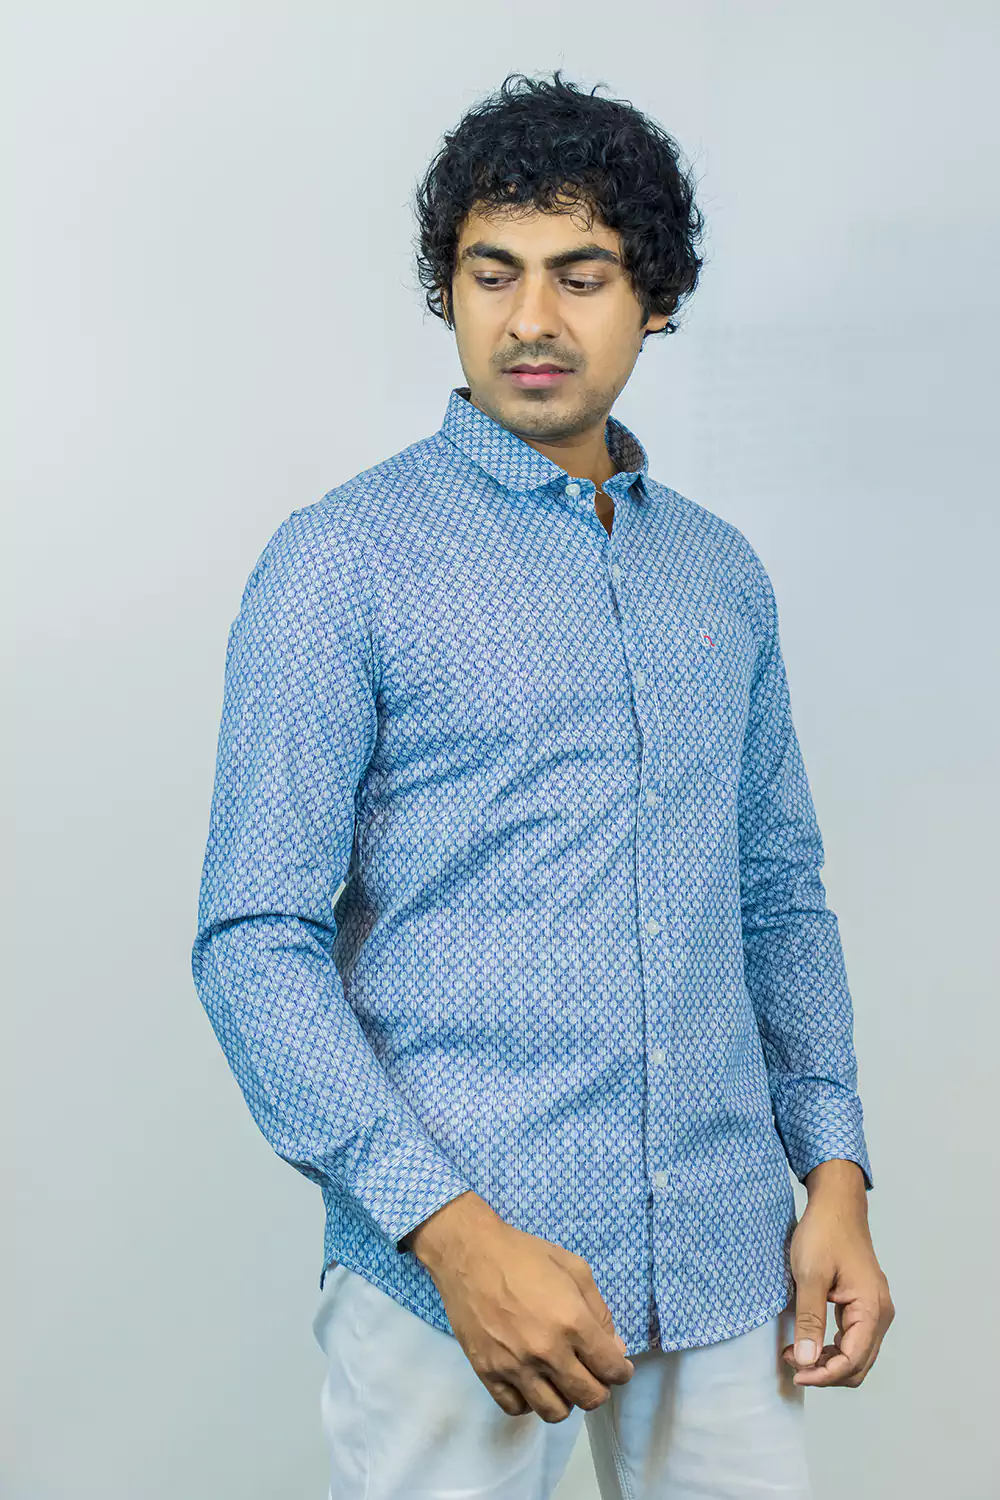 Soft Blue Geometric Patterned Shirt